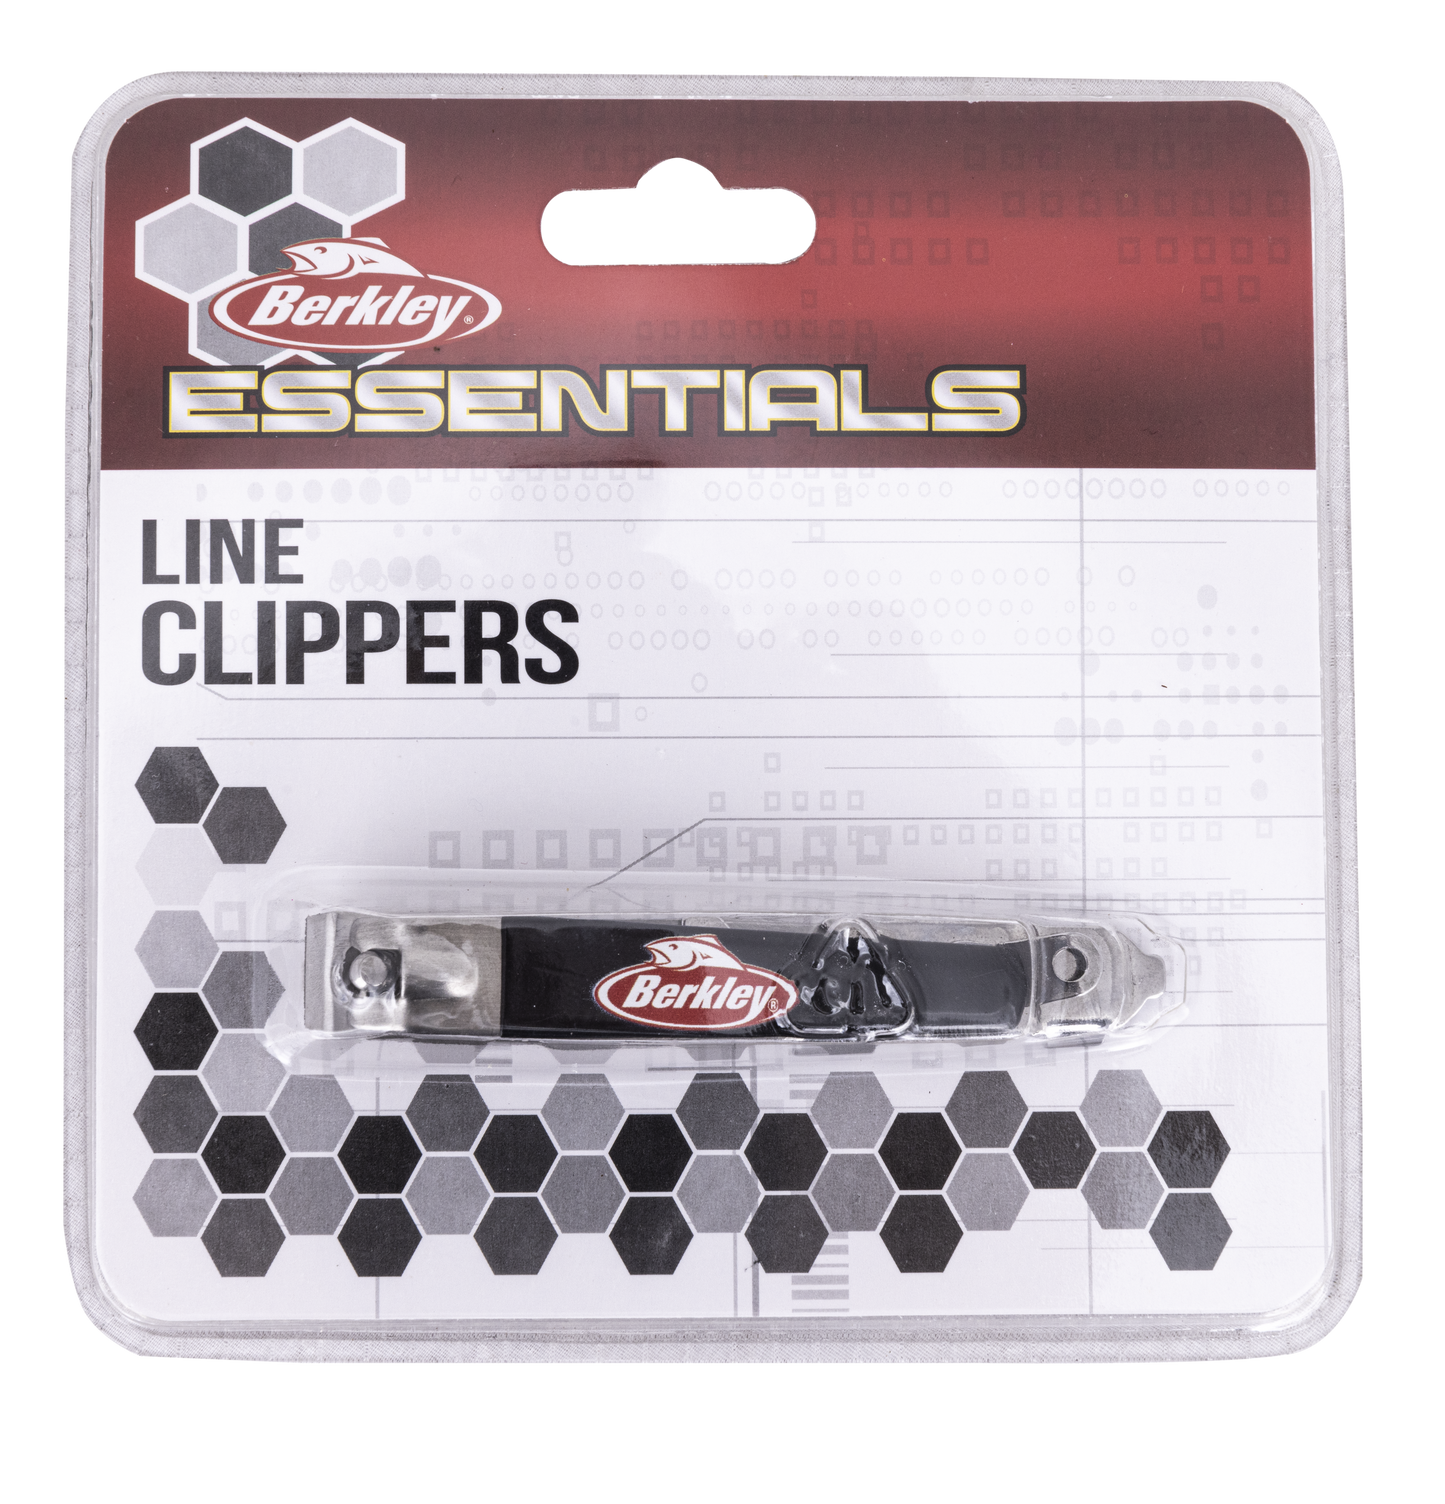 Berkley 1577541 New Essentials Fishing Line Clippers